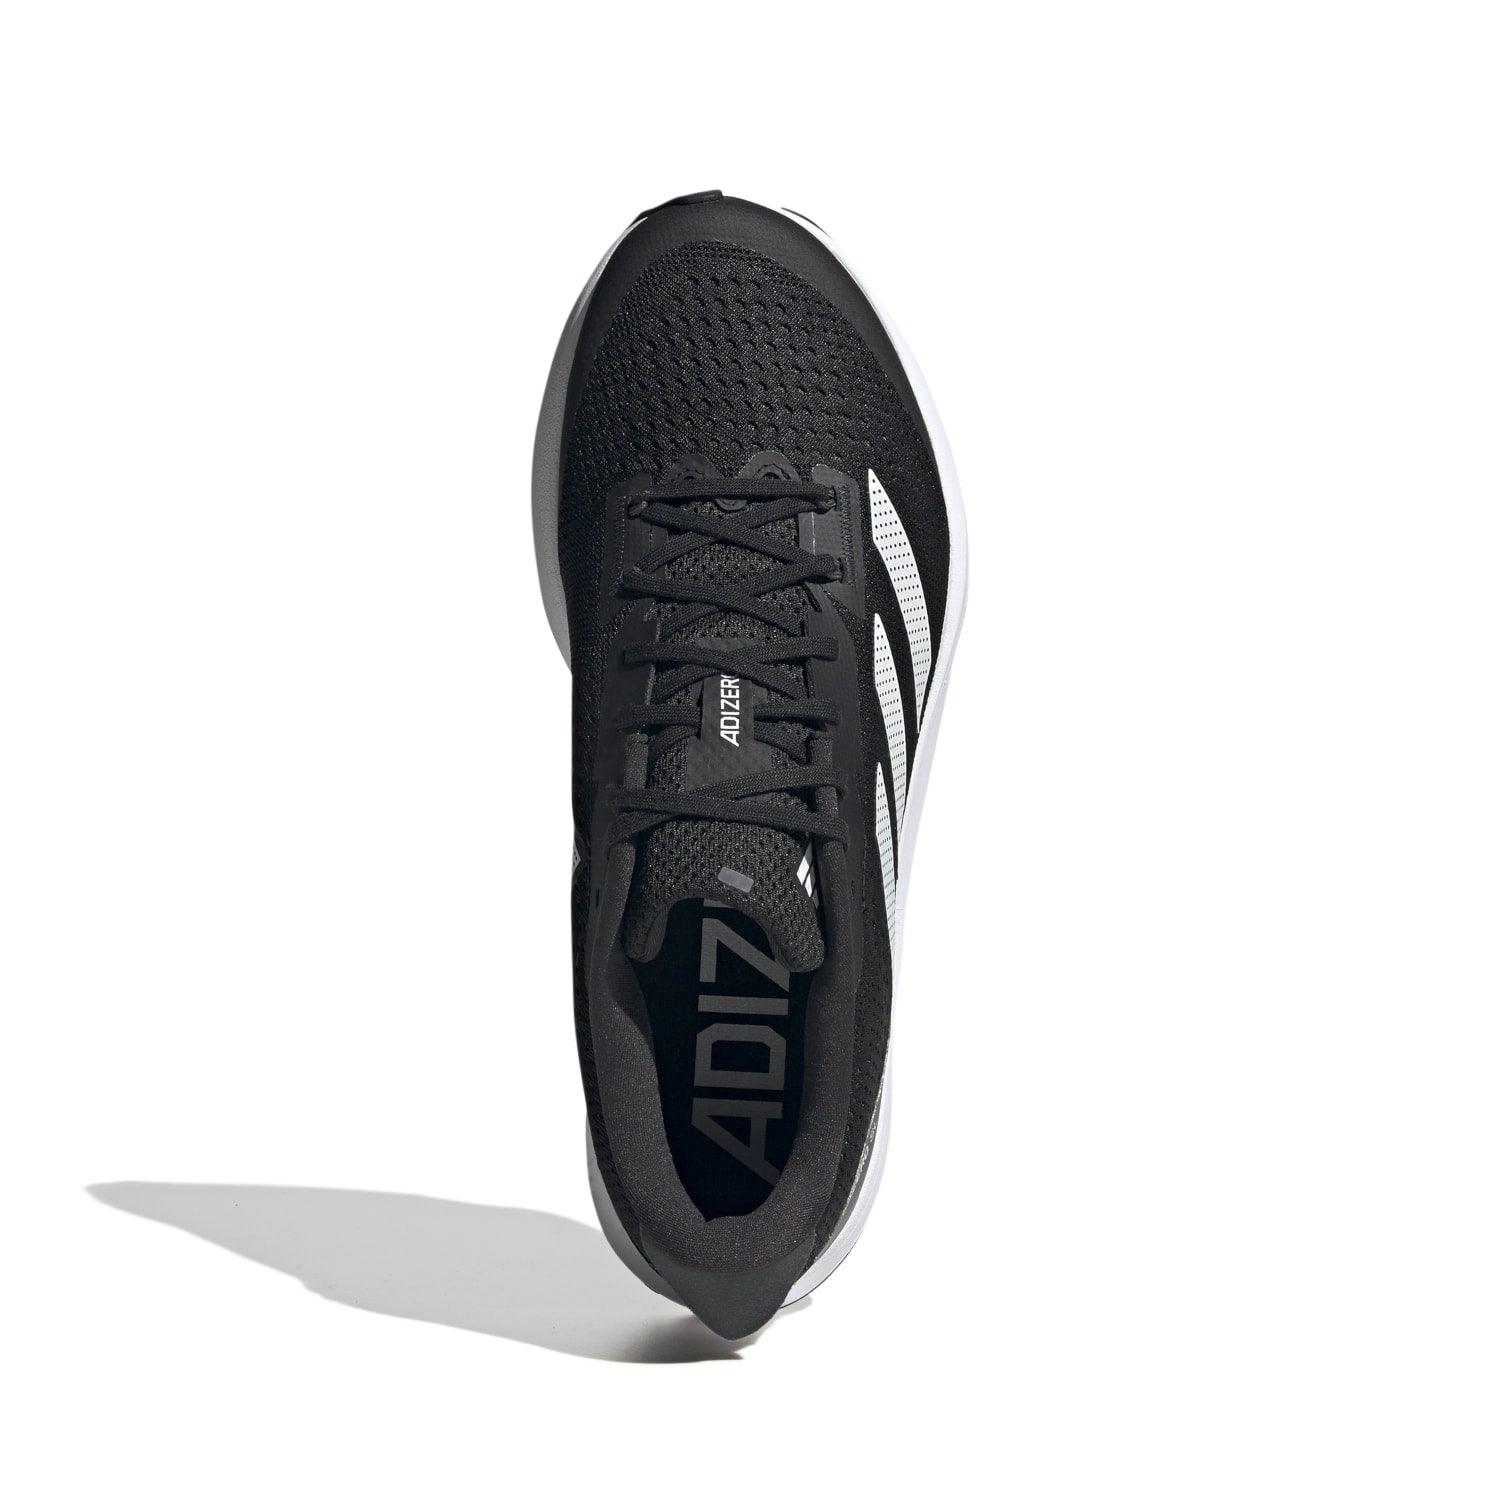 Adidas Adizero SL Men's - The Sweat Shop